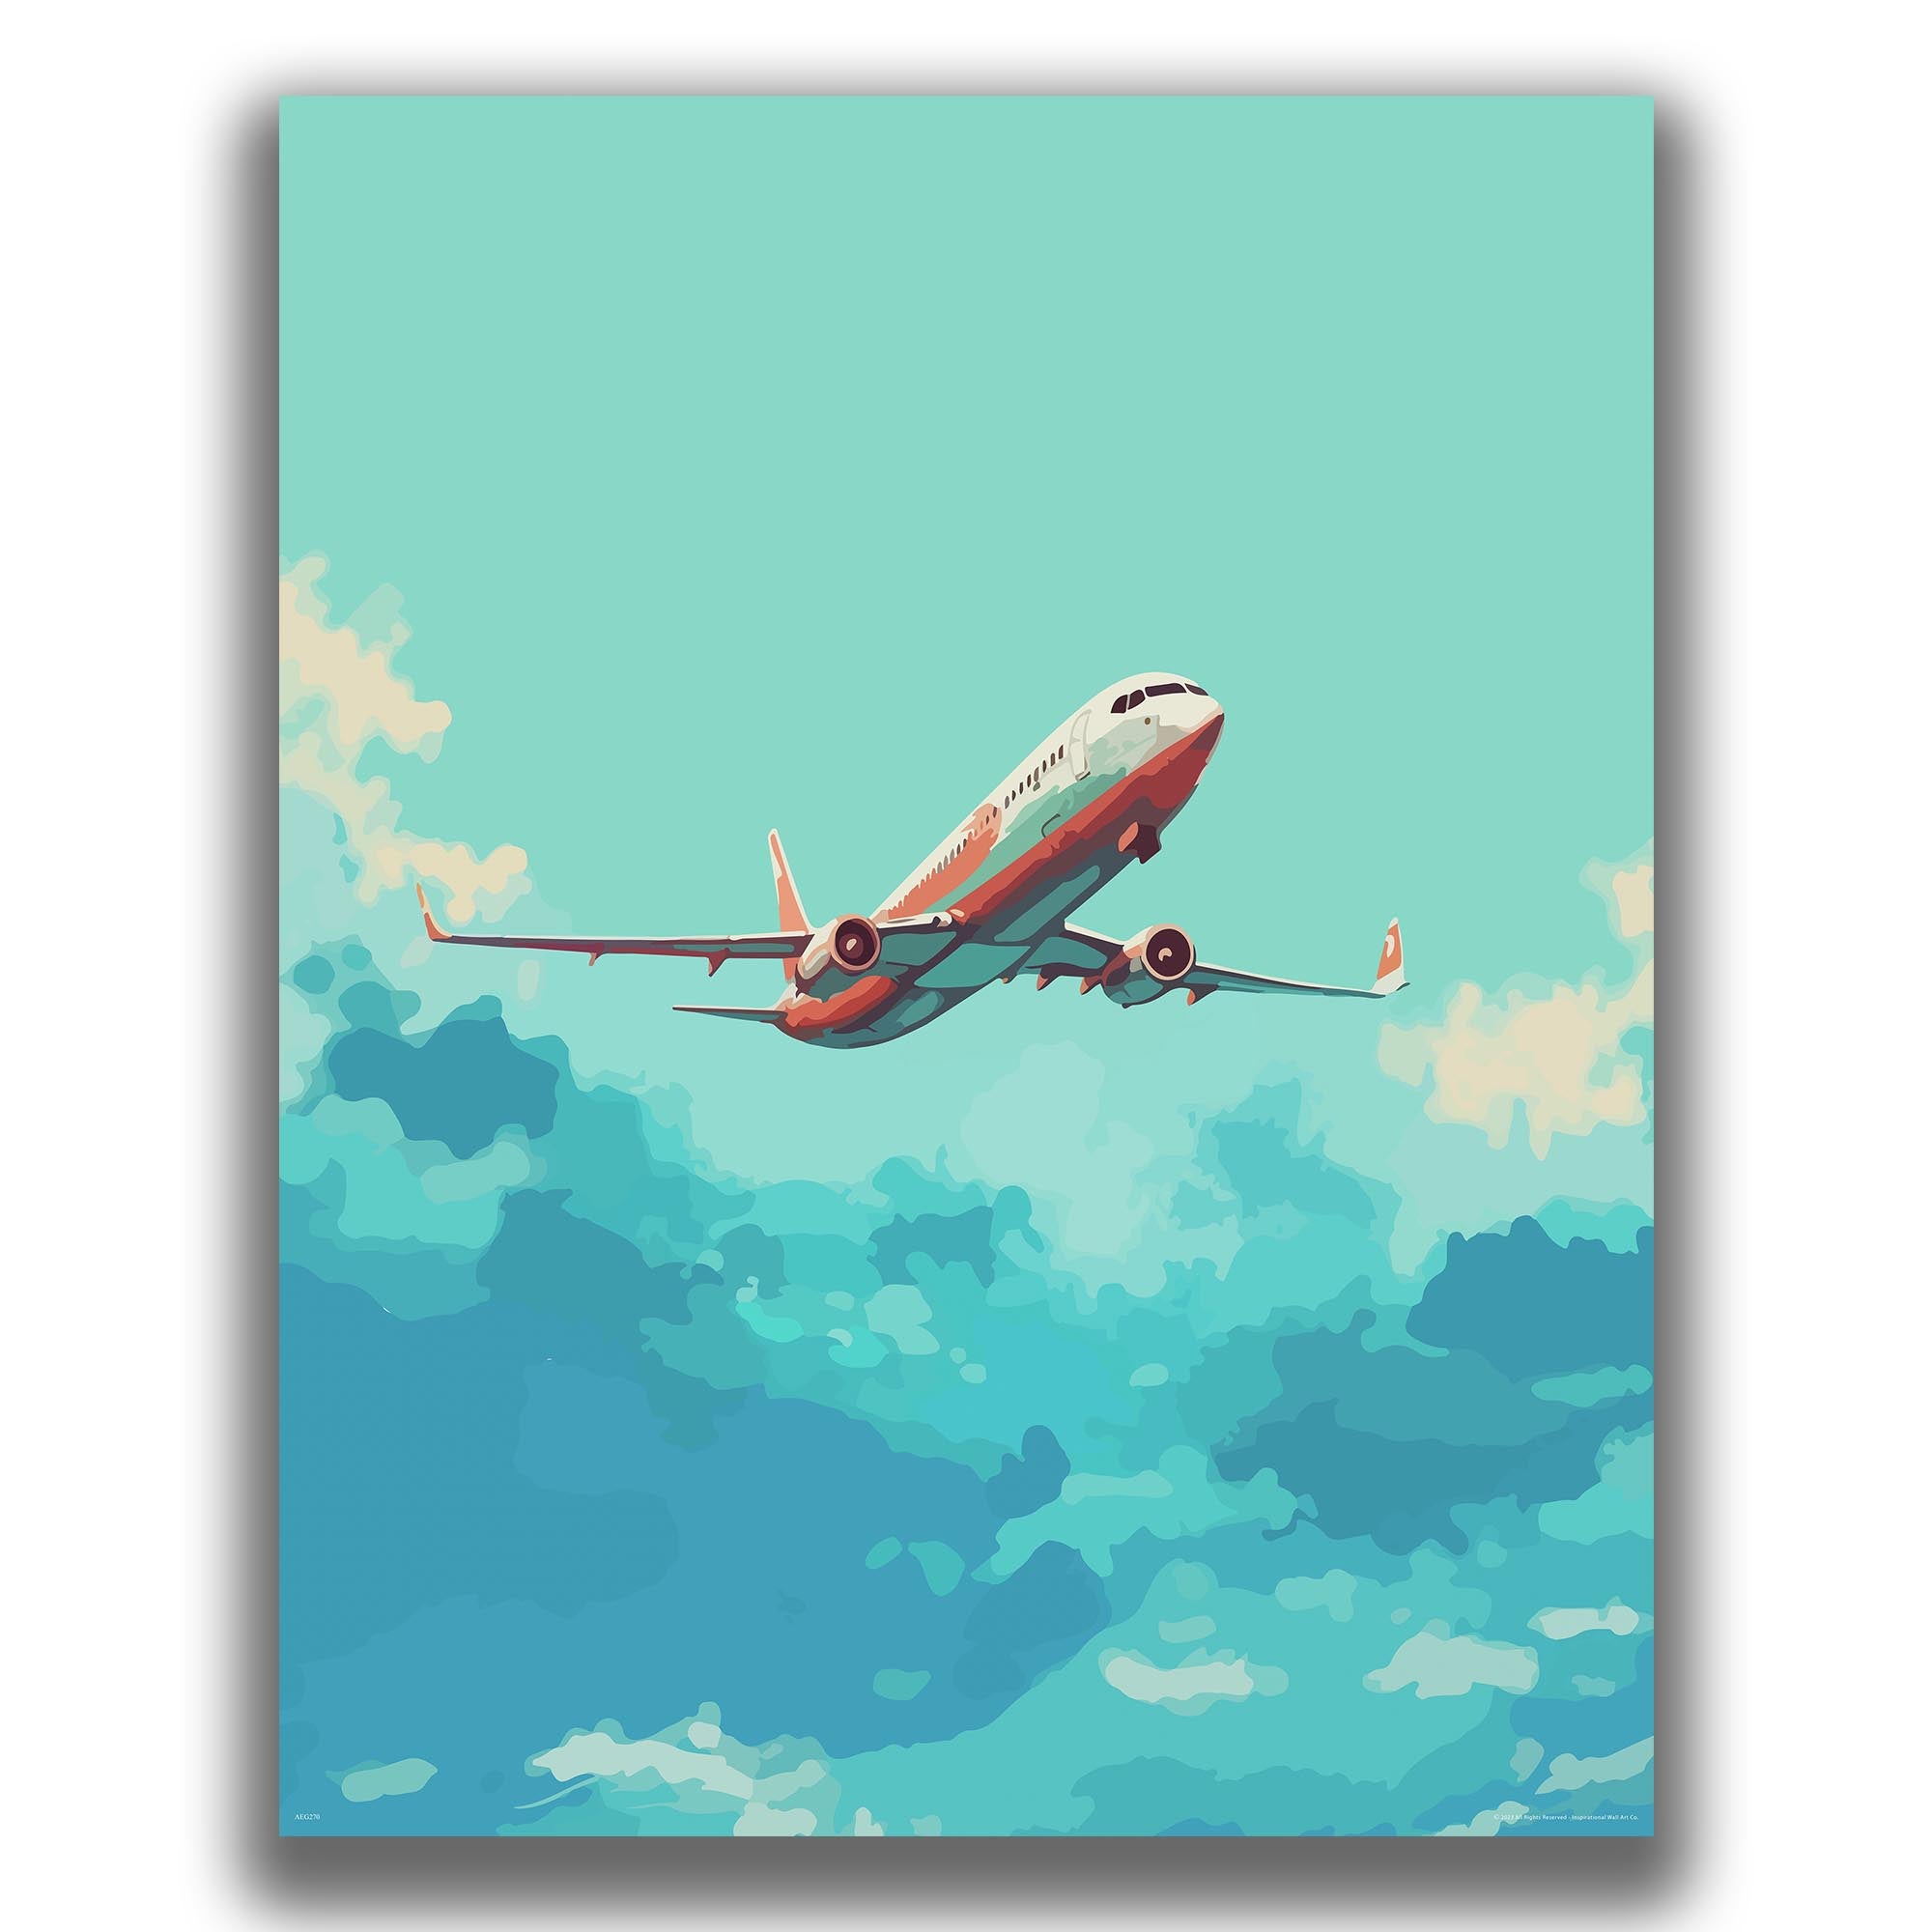 Soaring - Airplane Poster